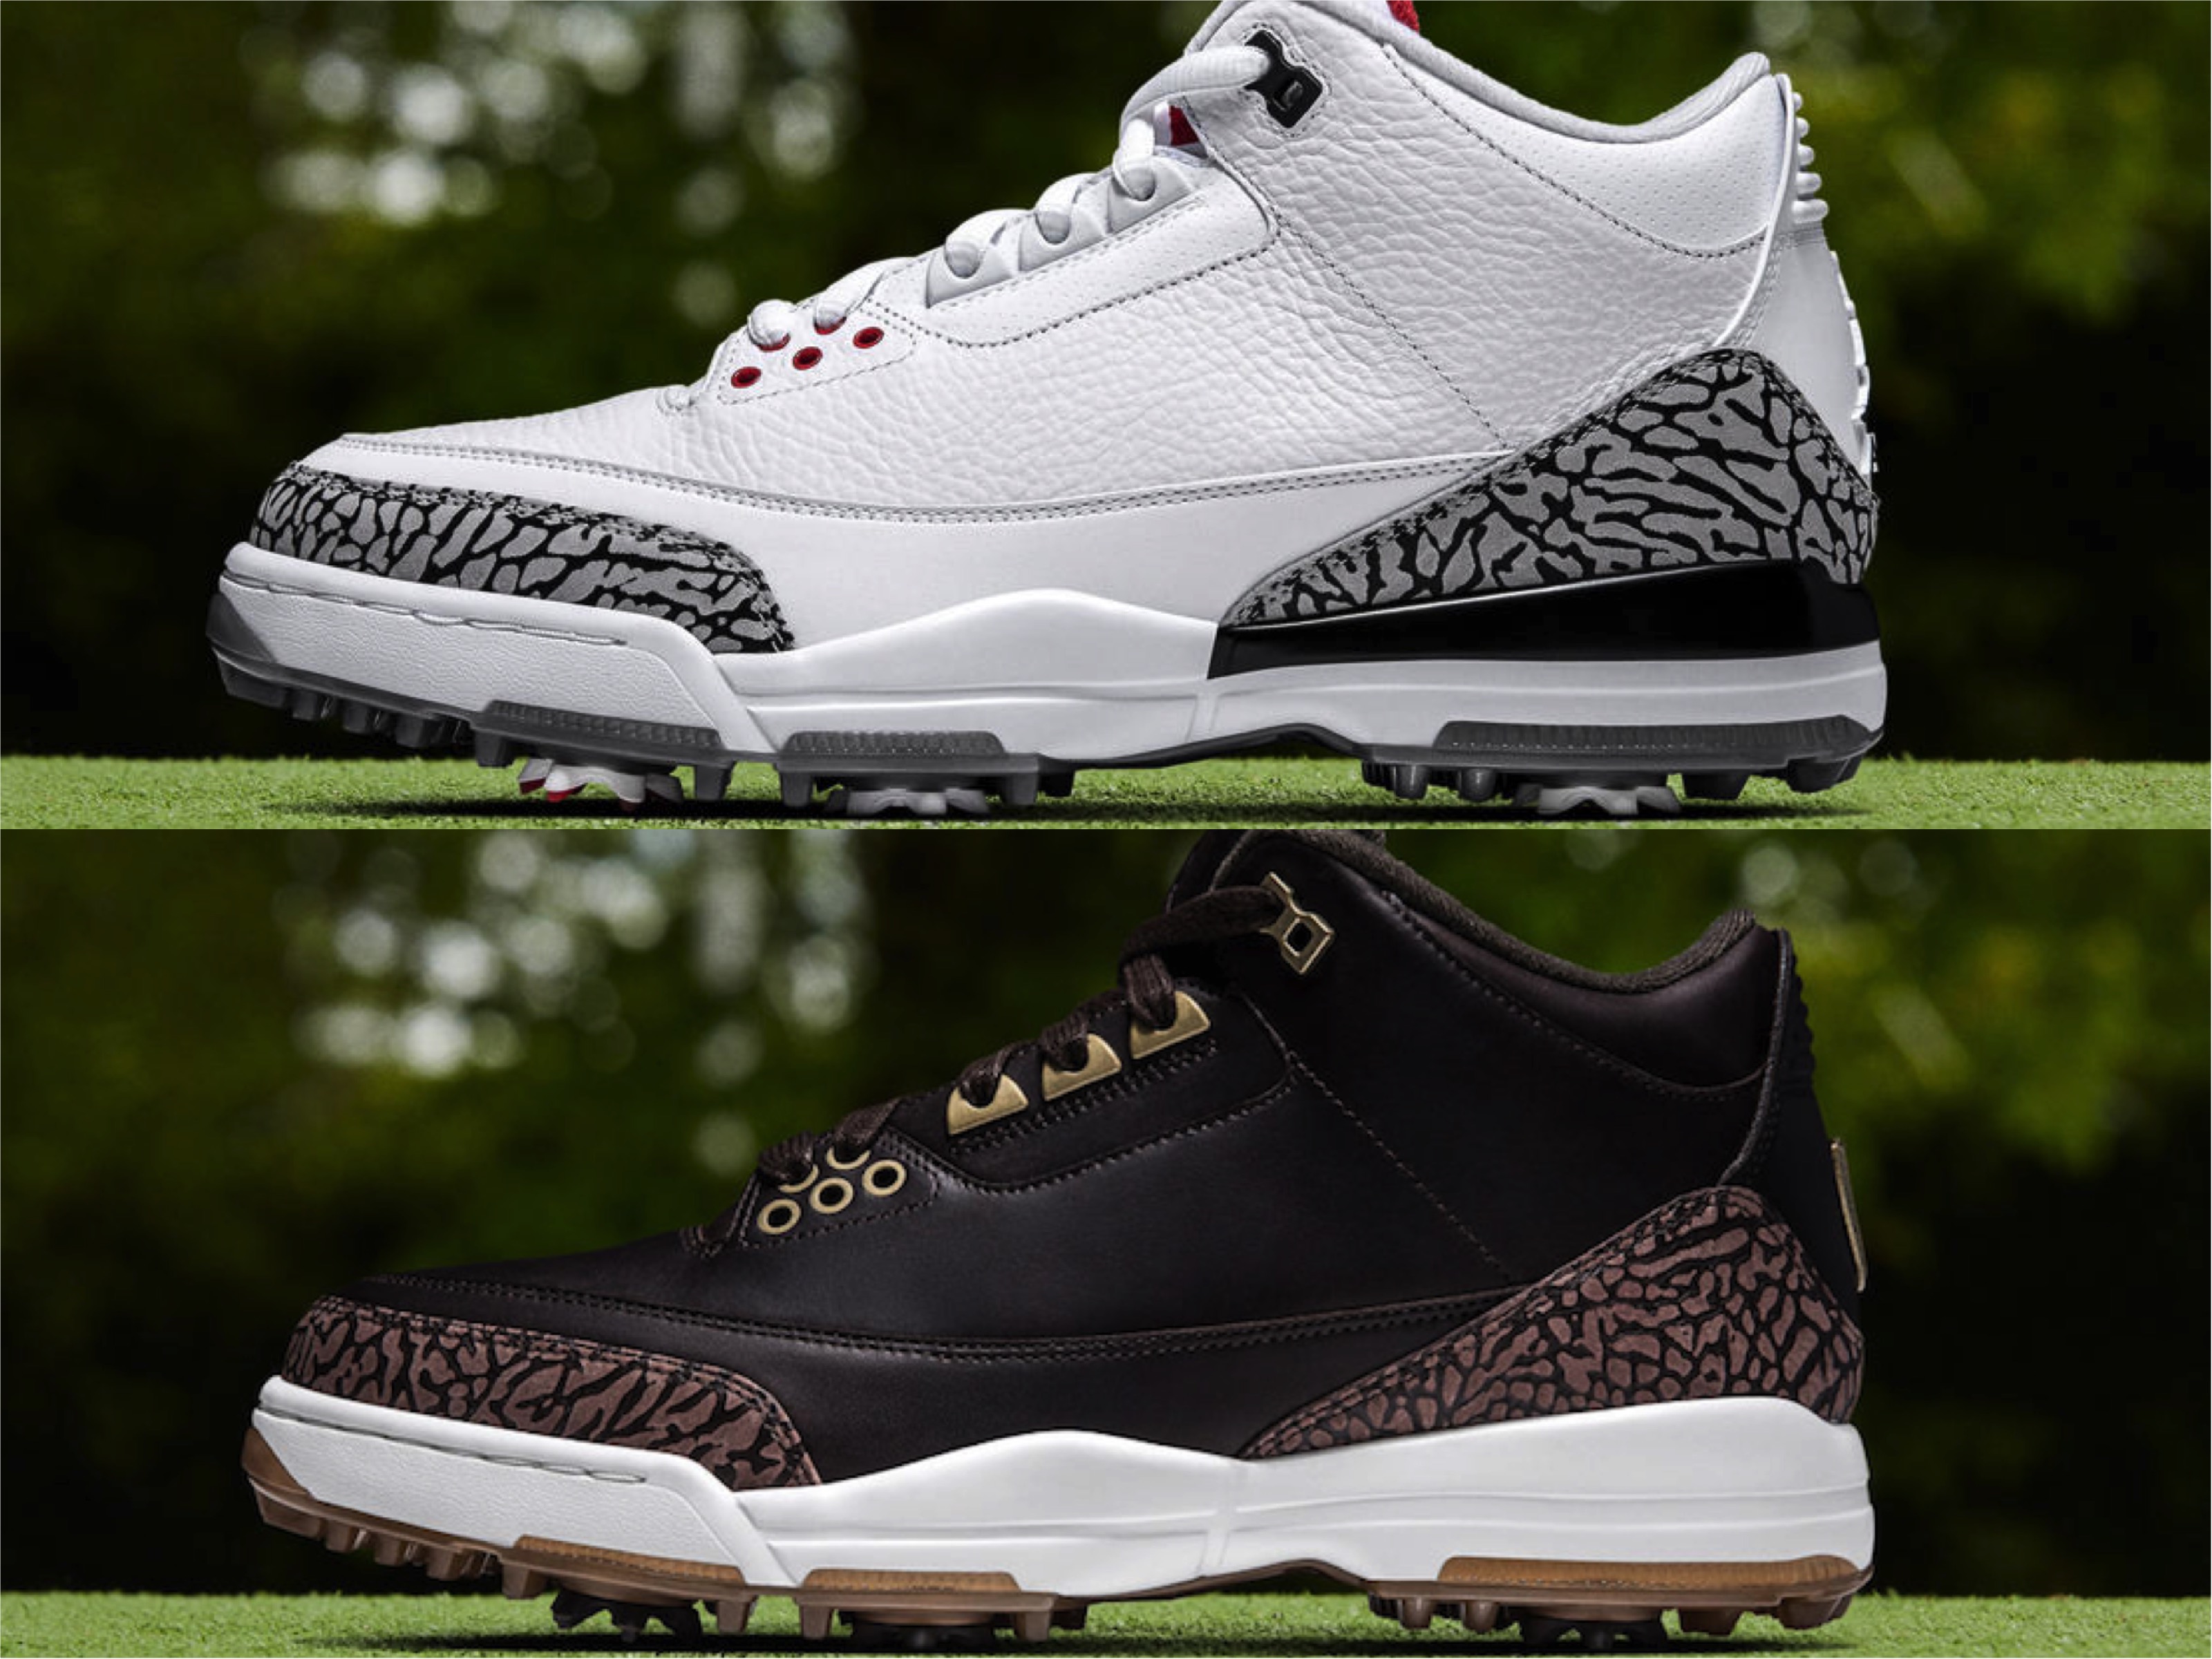 release Air Jordan III golf shoes 